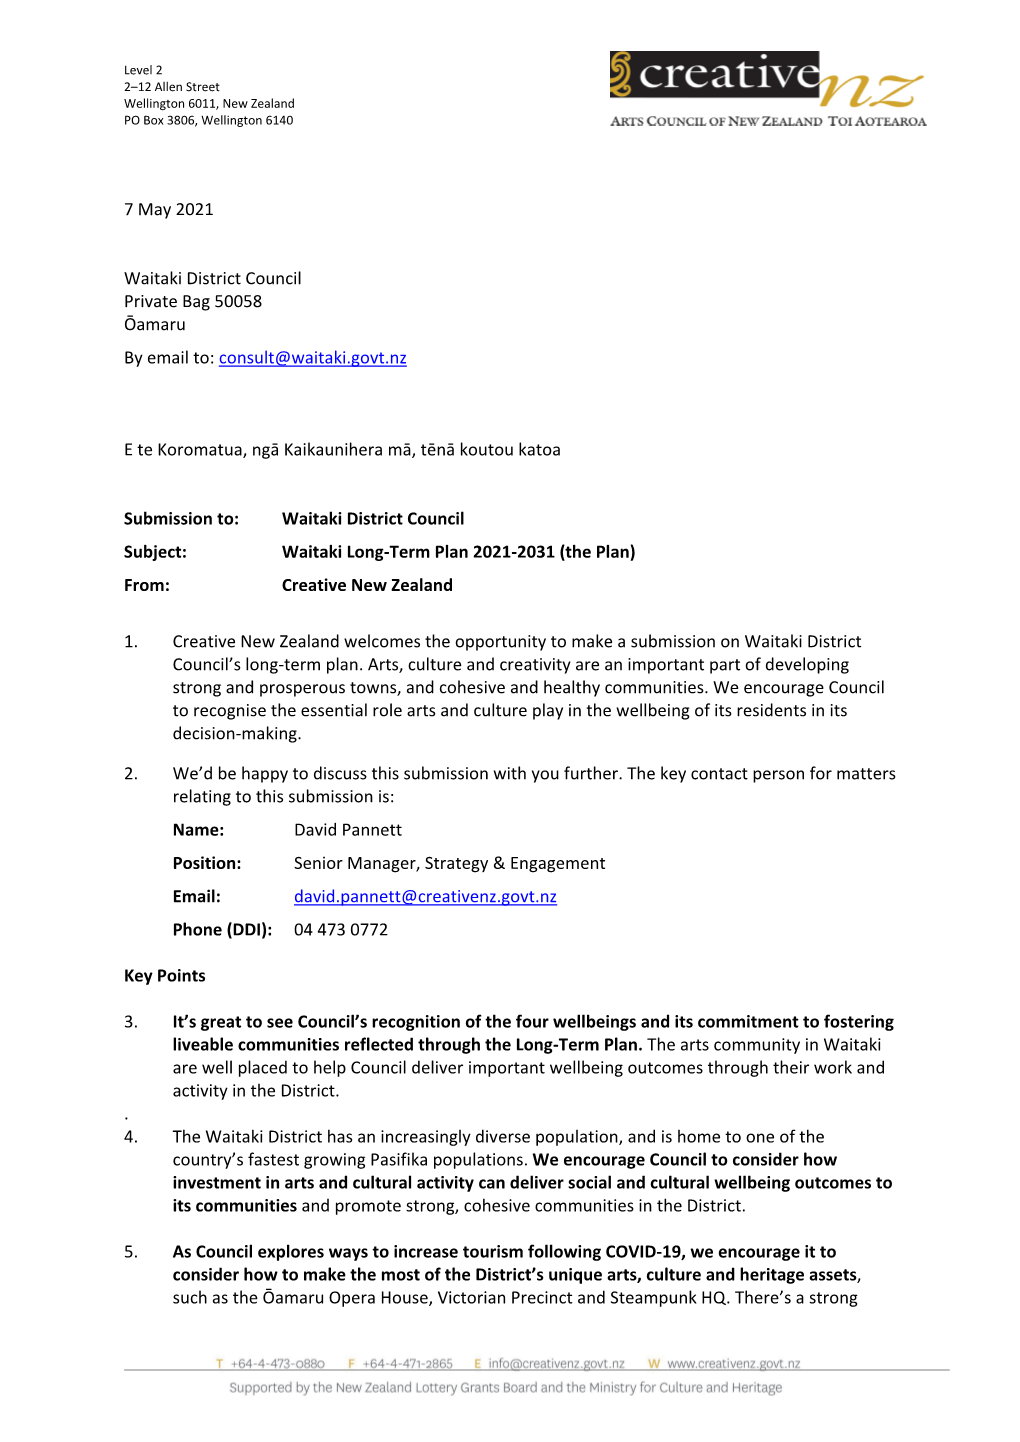 CNZ Submission on Waitaki District Council's Long-Term Plan 2021-2031